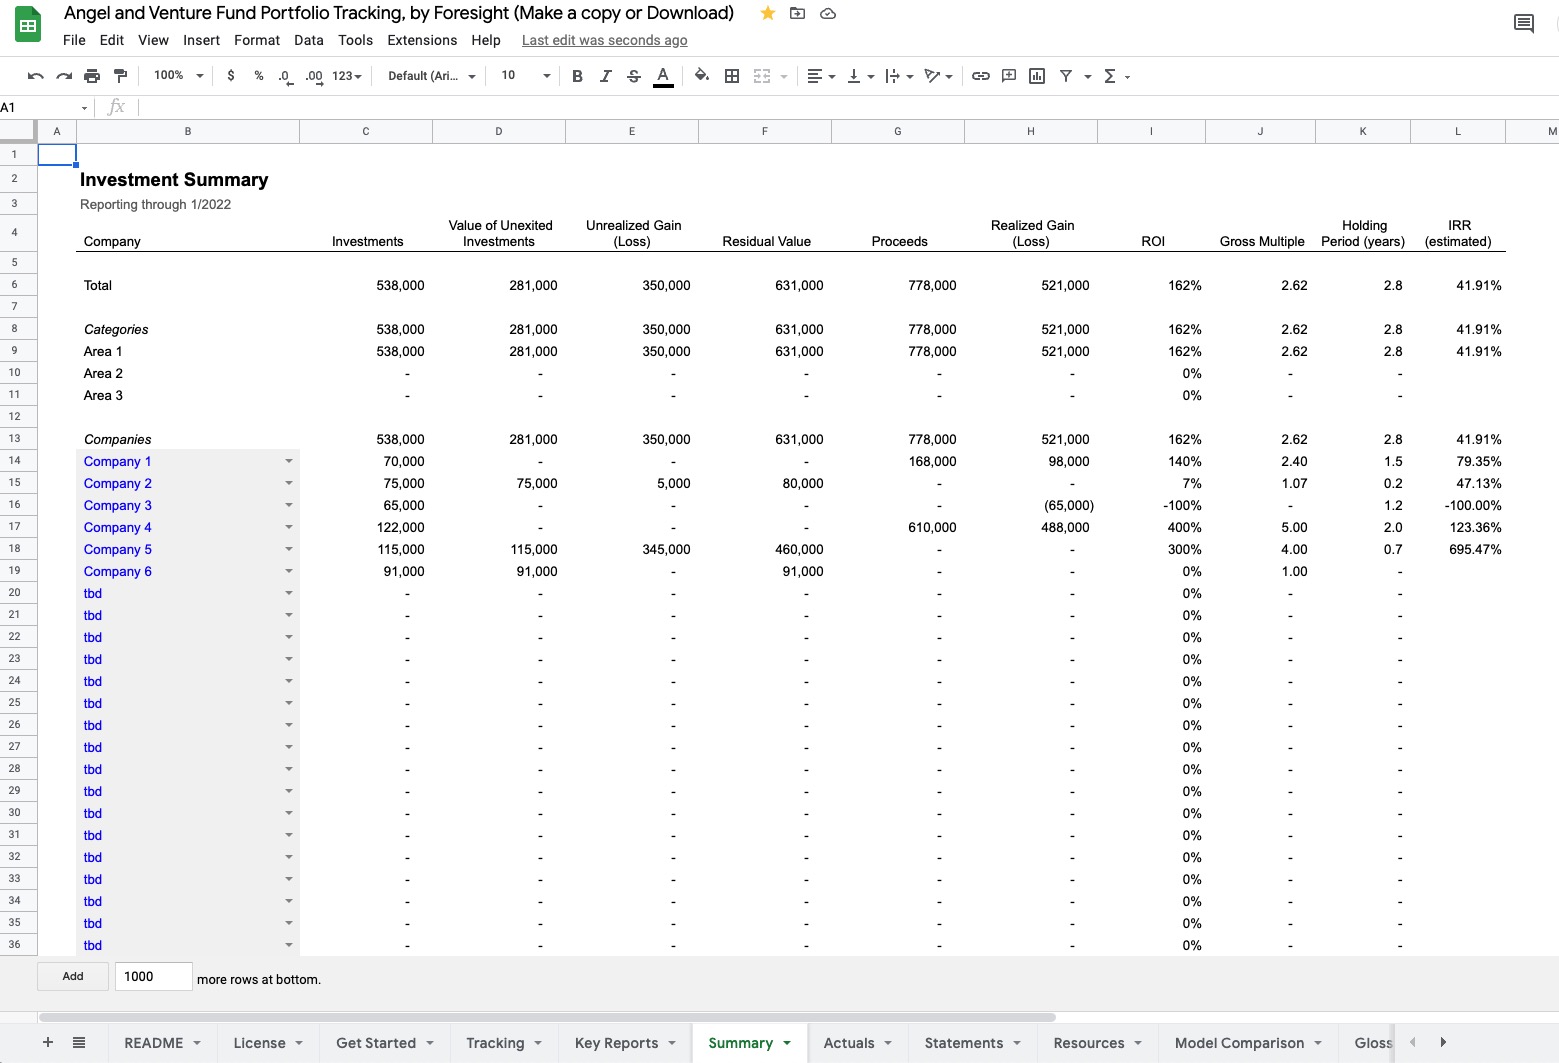 Angel And Venture Fund Portfolio Tracking Screenshot